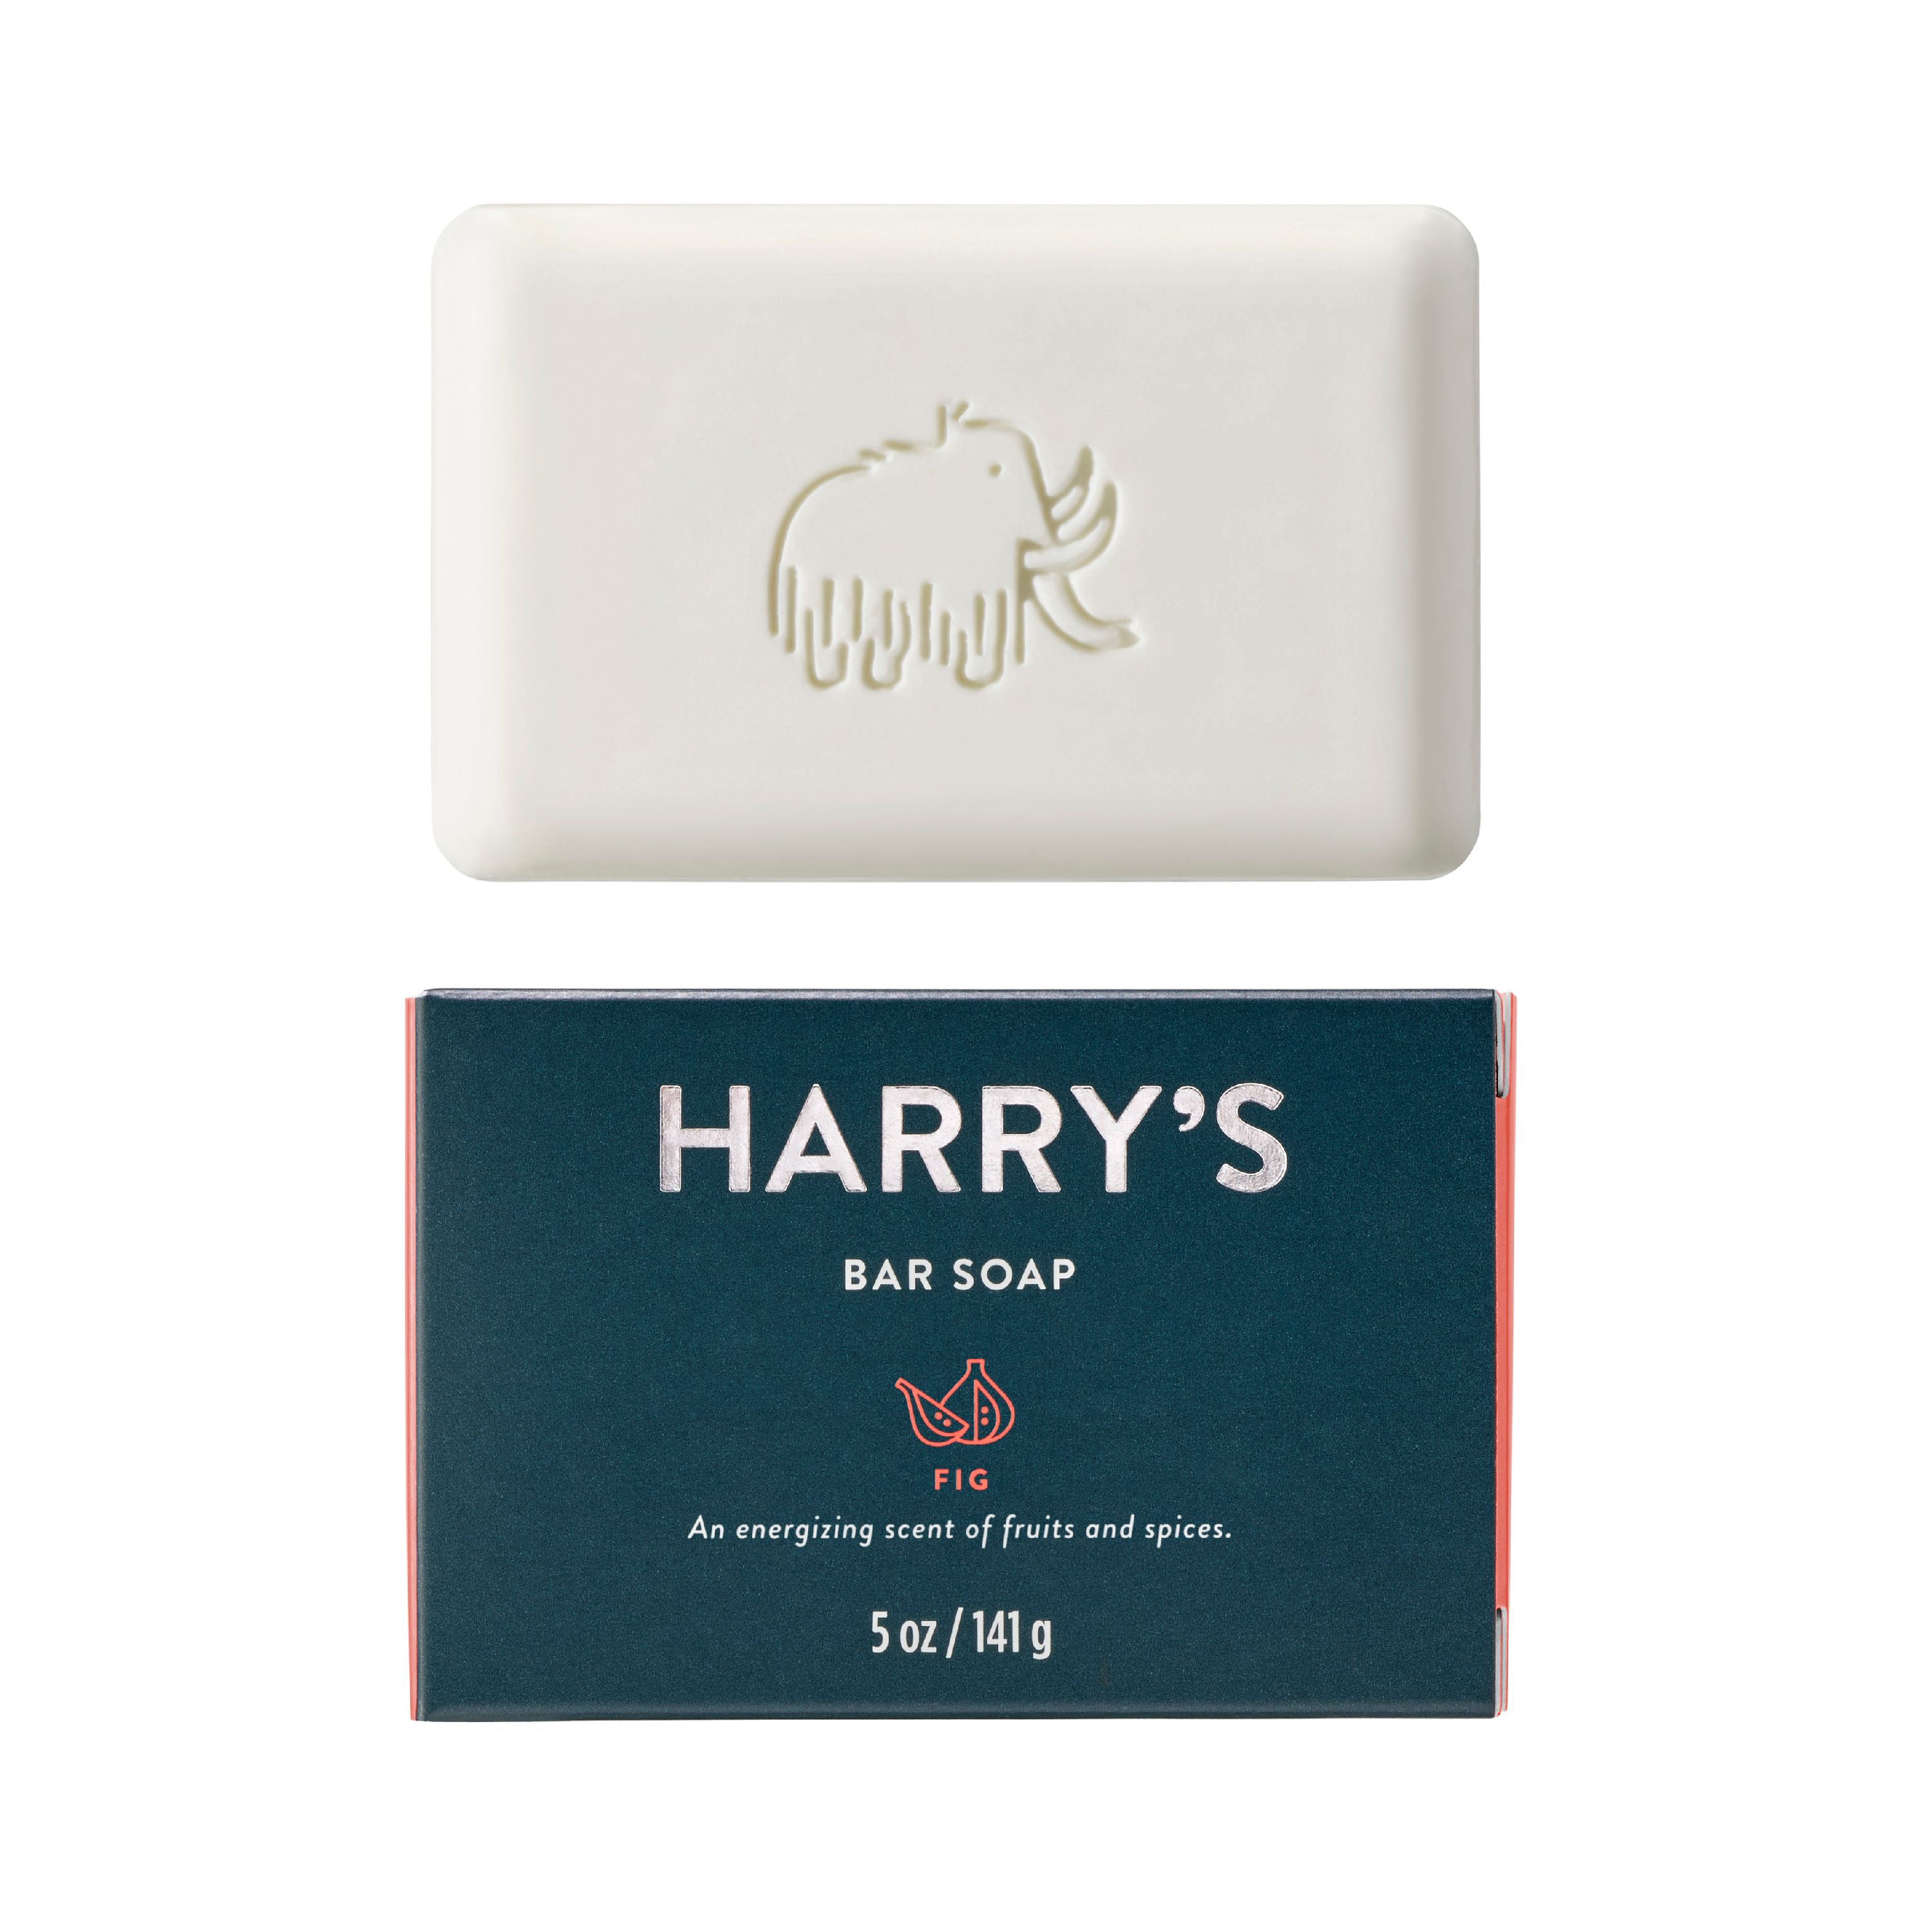 Harry's Shiso Bar Soap, 2 ct / 4 oz - Food 4 Less